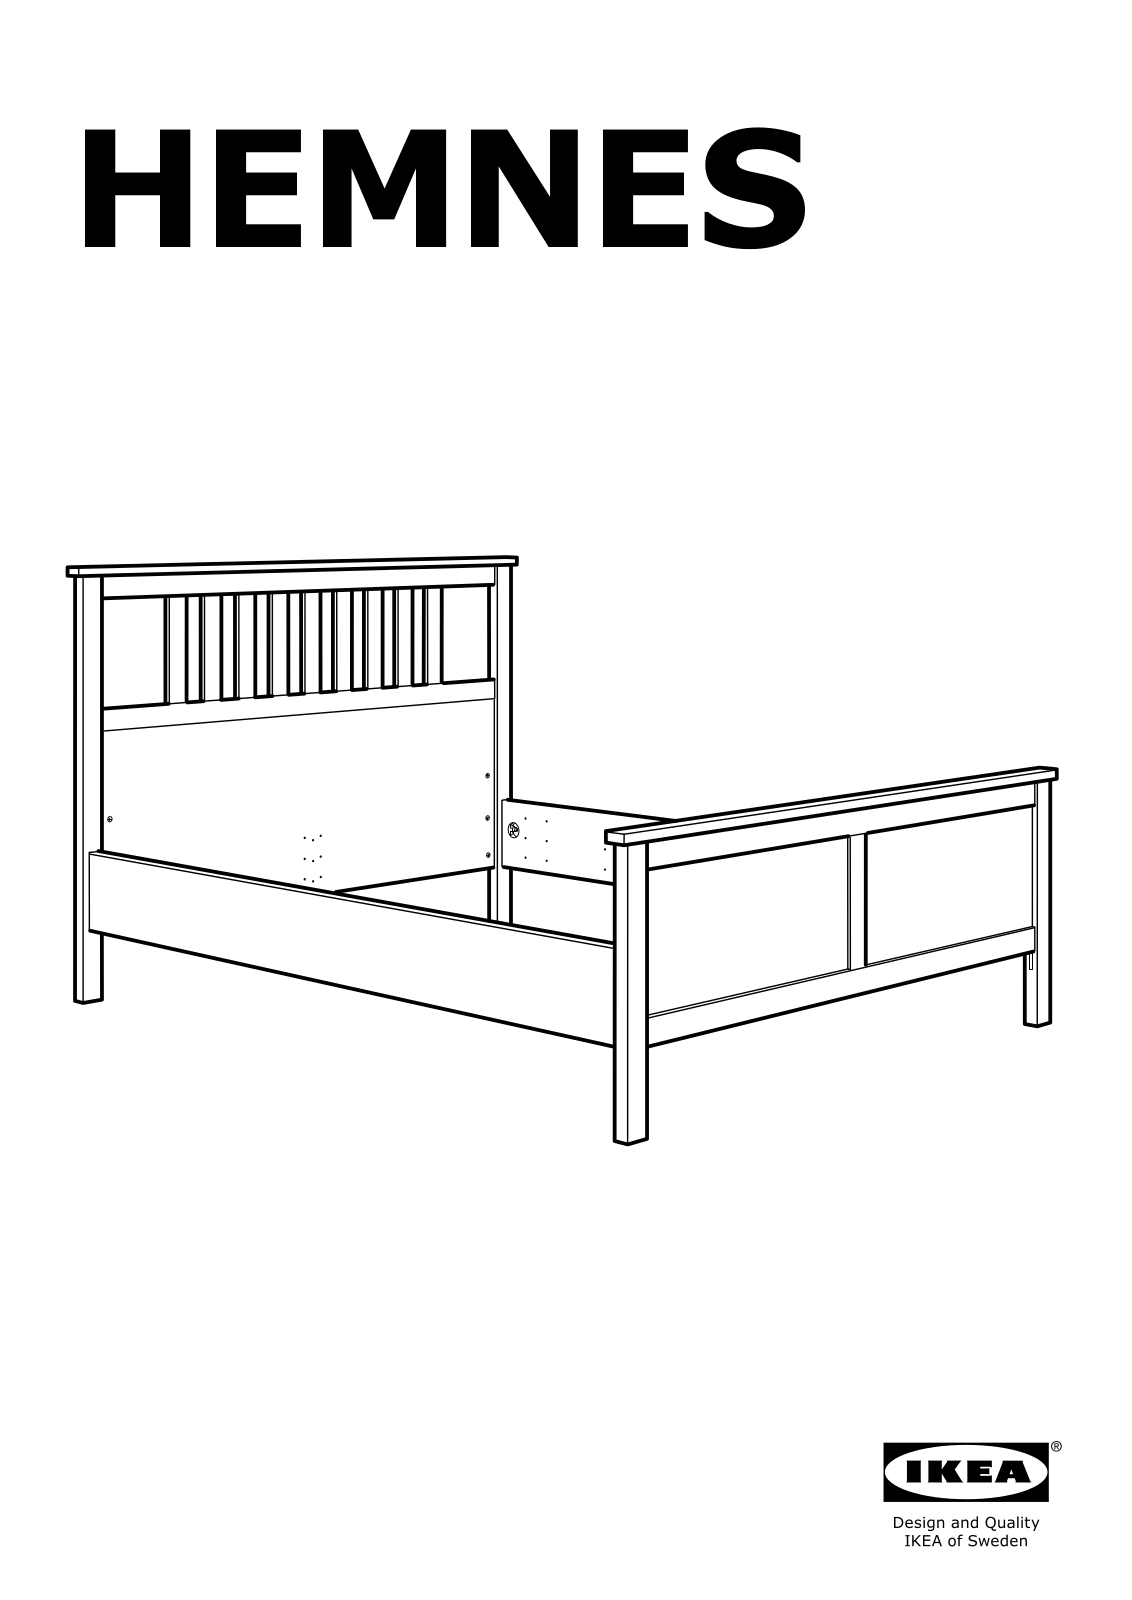 IKEA HEMNES Bed frame Assembly Instruction